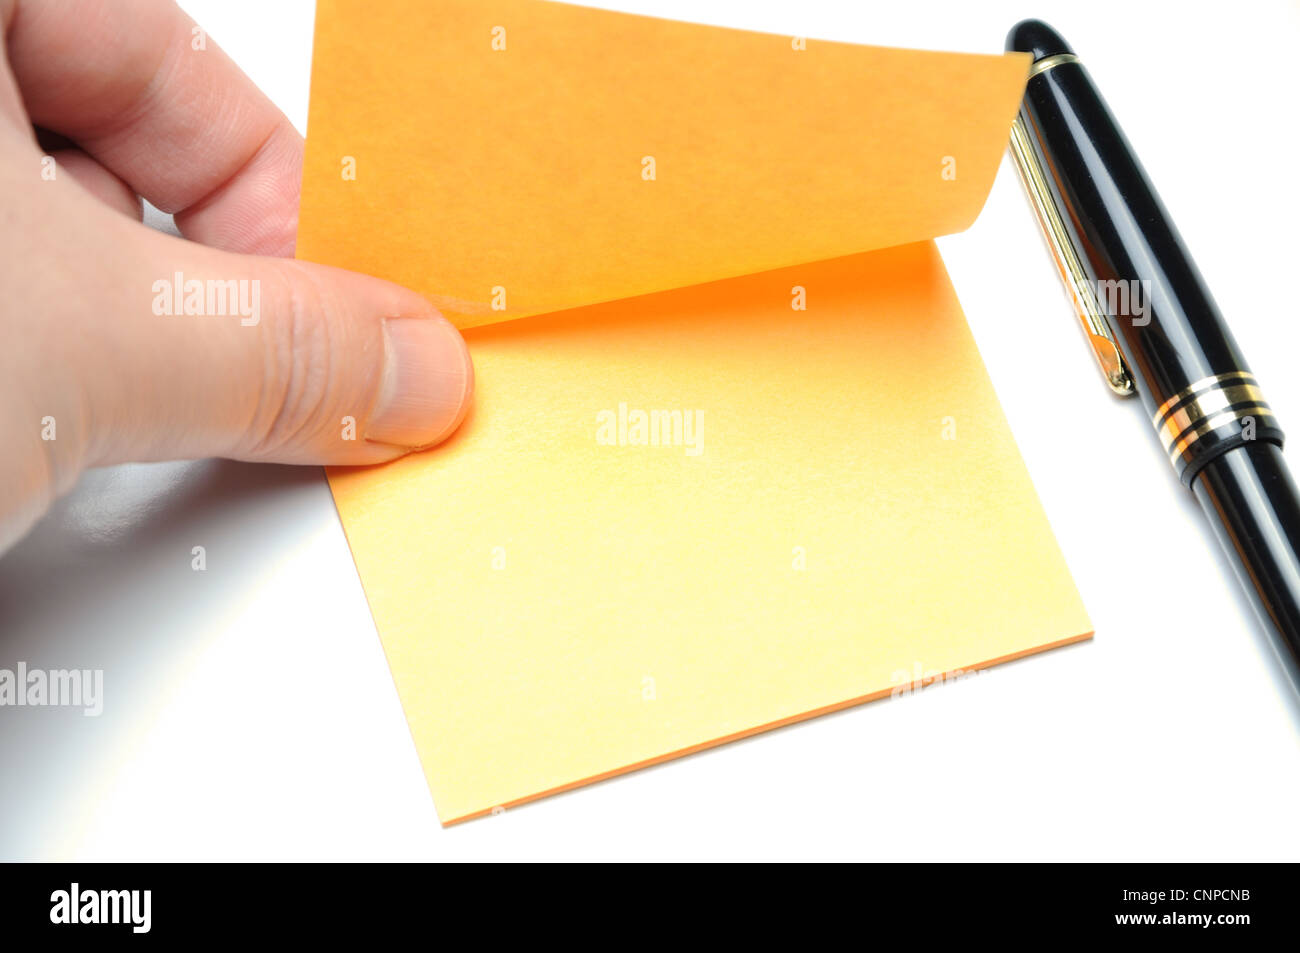 Tearing adhesive note Stock Photo